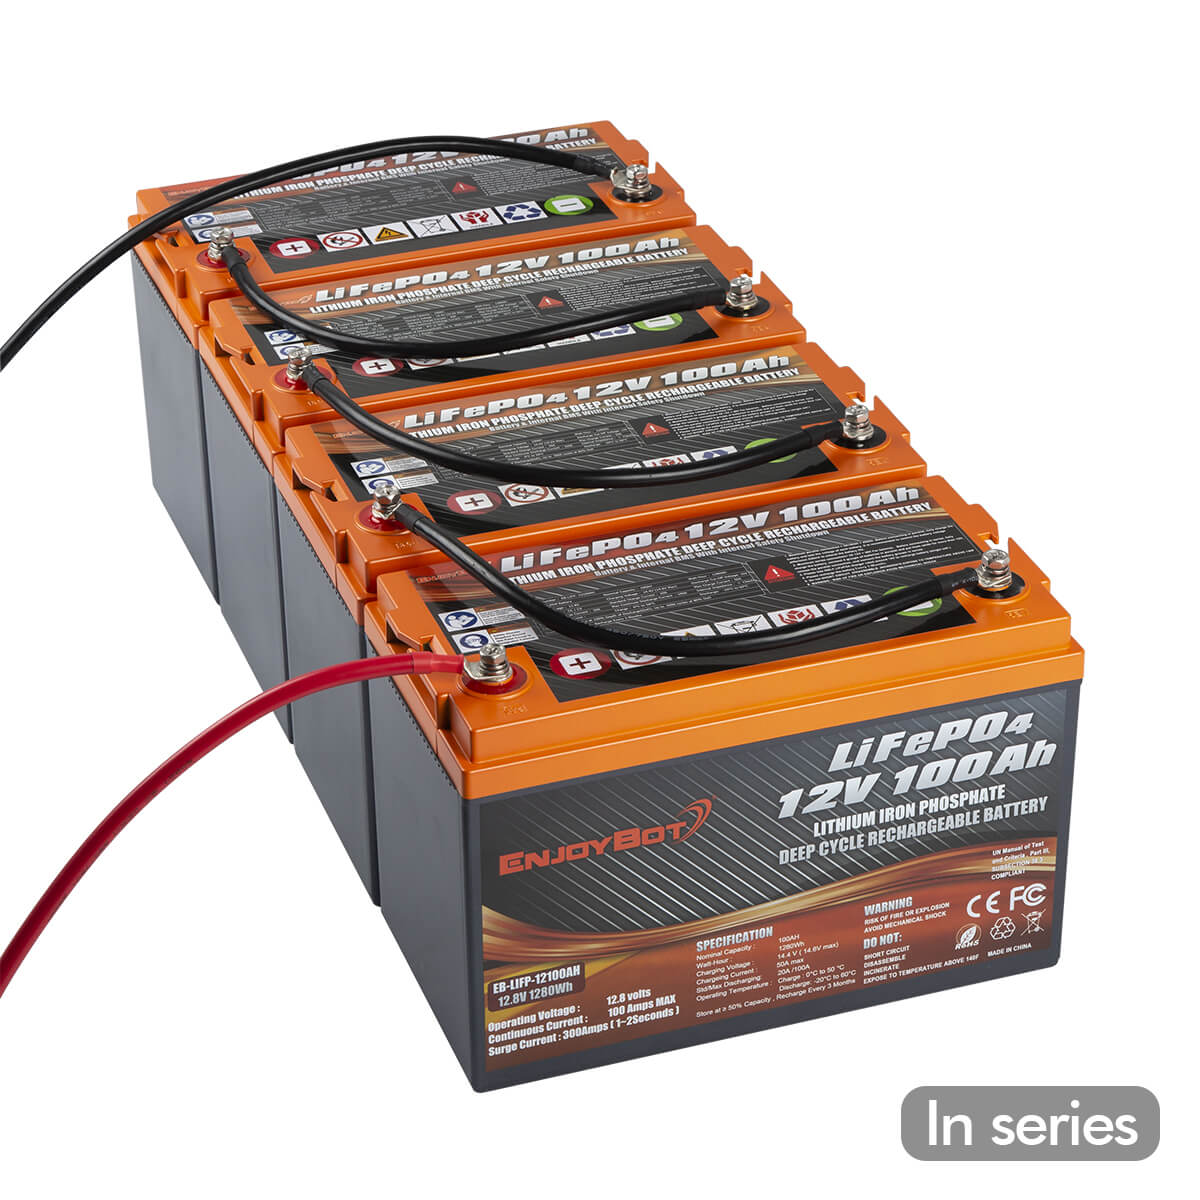 12V100Ah LiFePO4 Lithium Battery Packs LiFePO4 Batteries Supplier